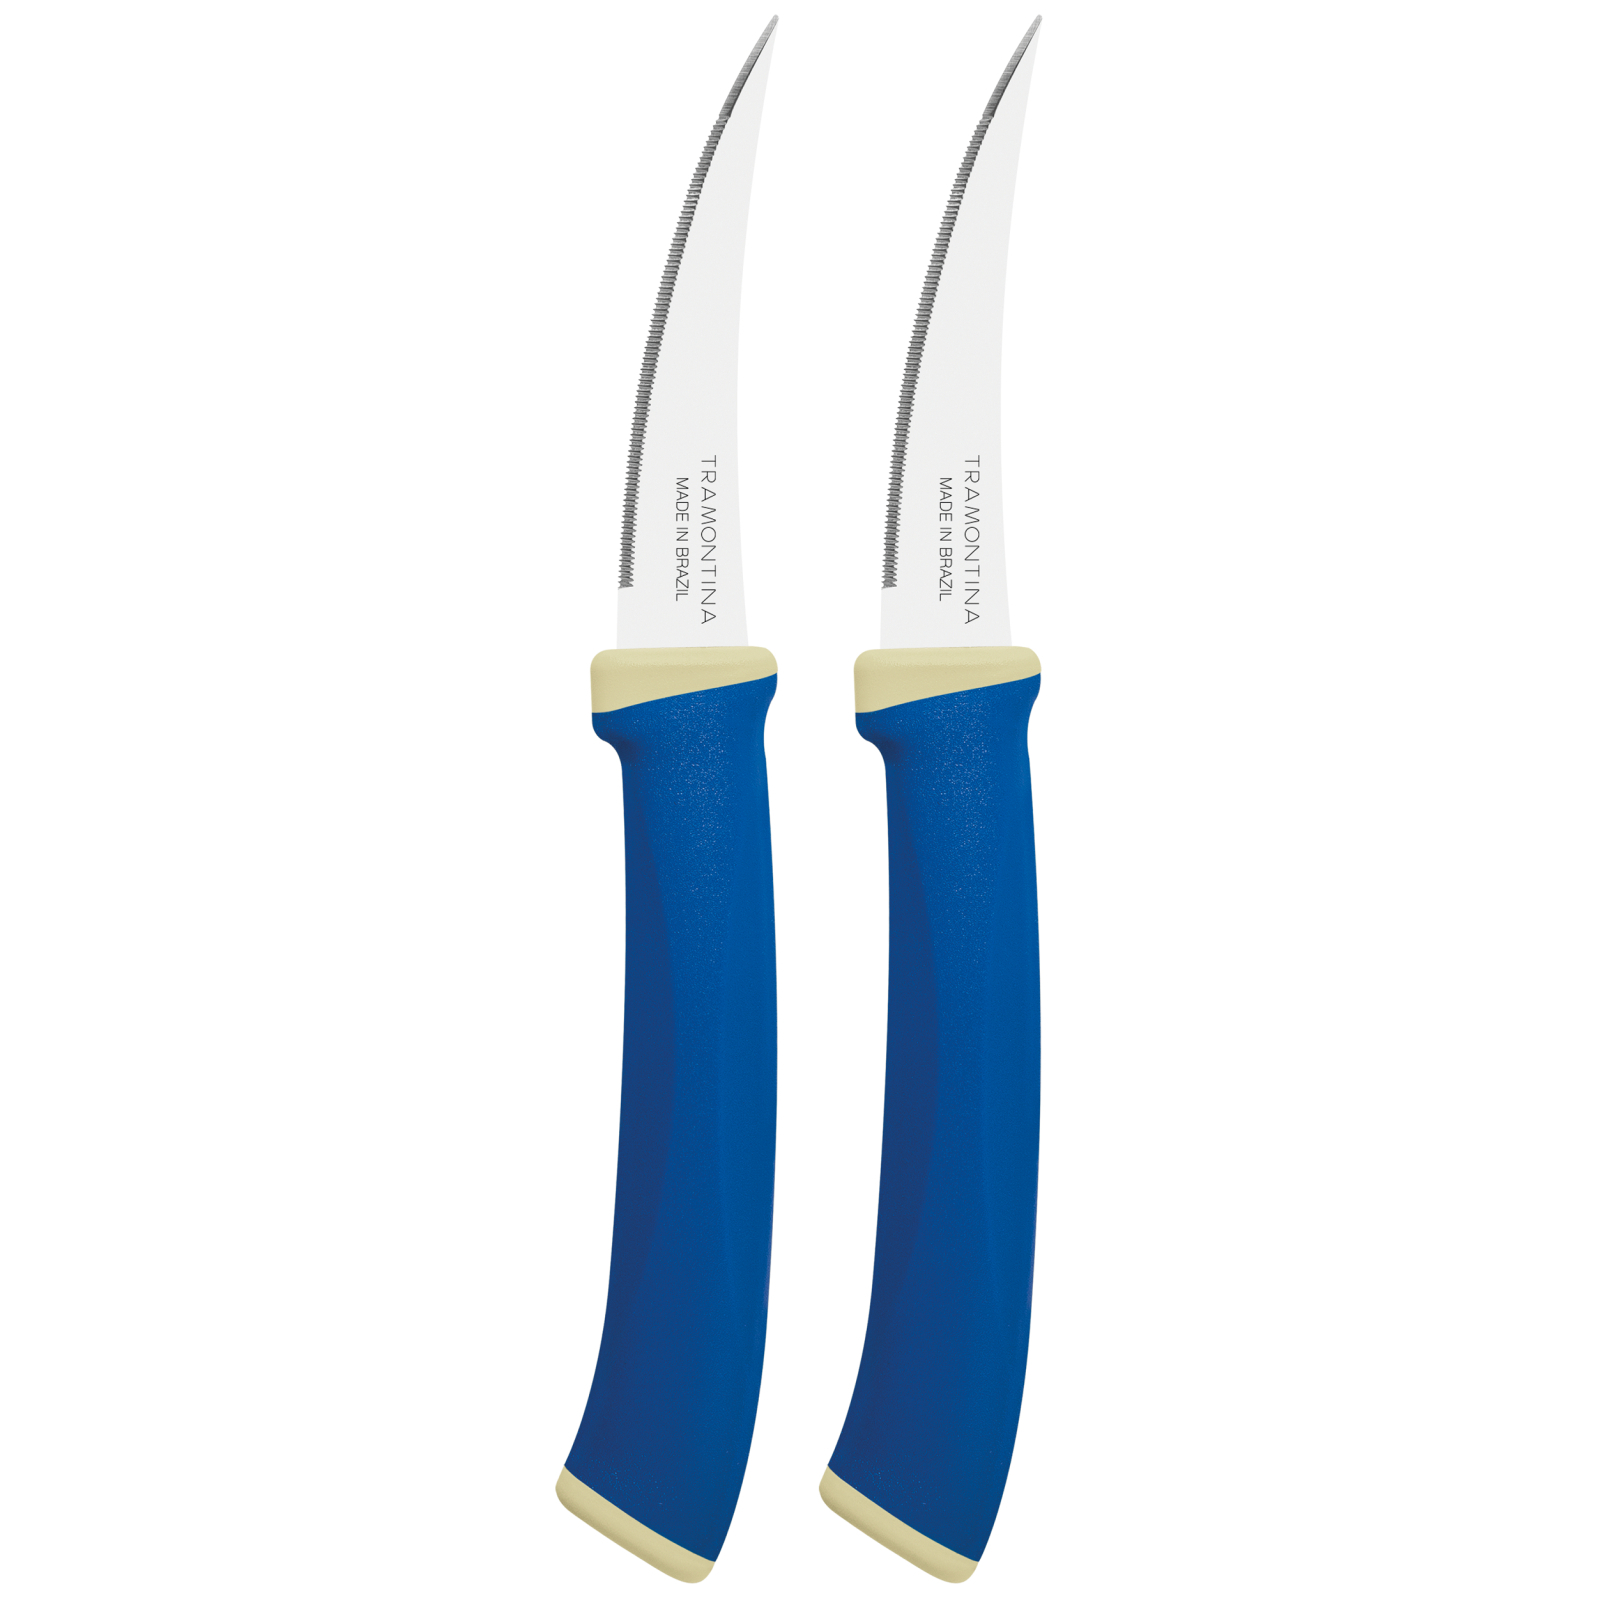 Набор ножей Tramontina Felice Blue Tomato 76 мм 2 шт (23495/213)